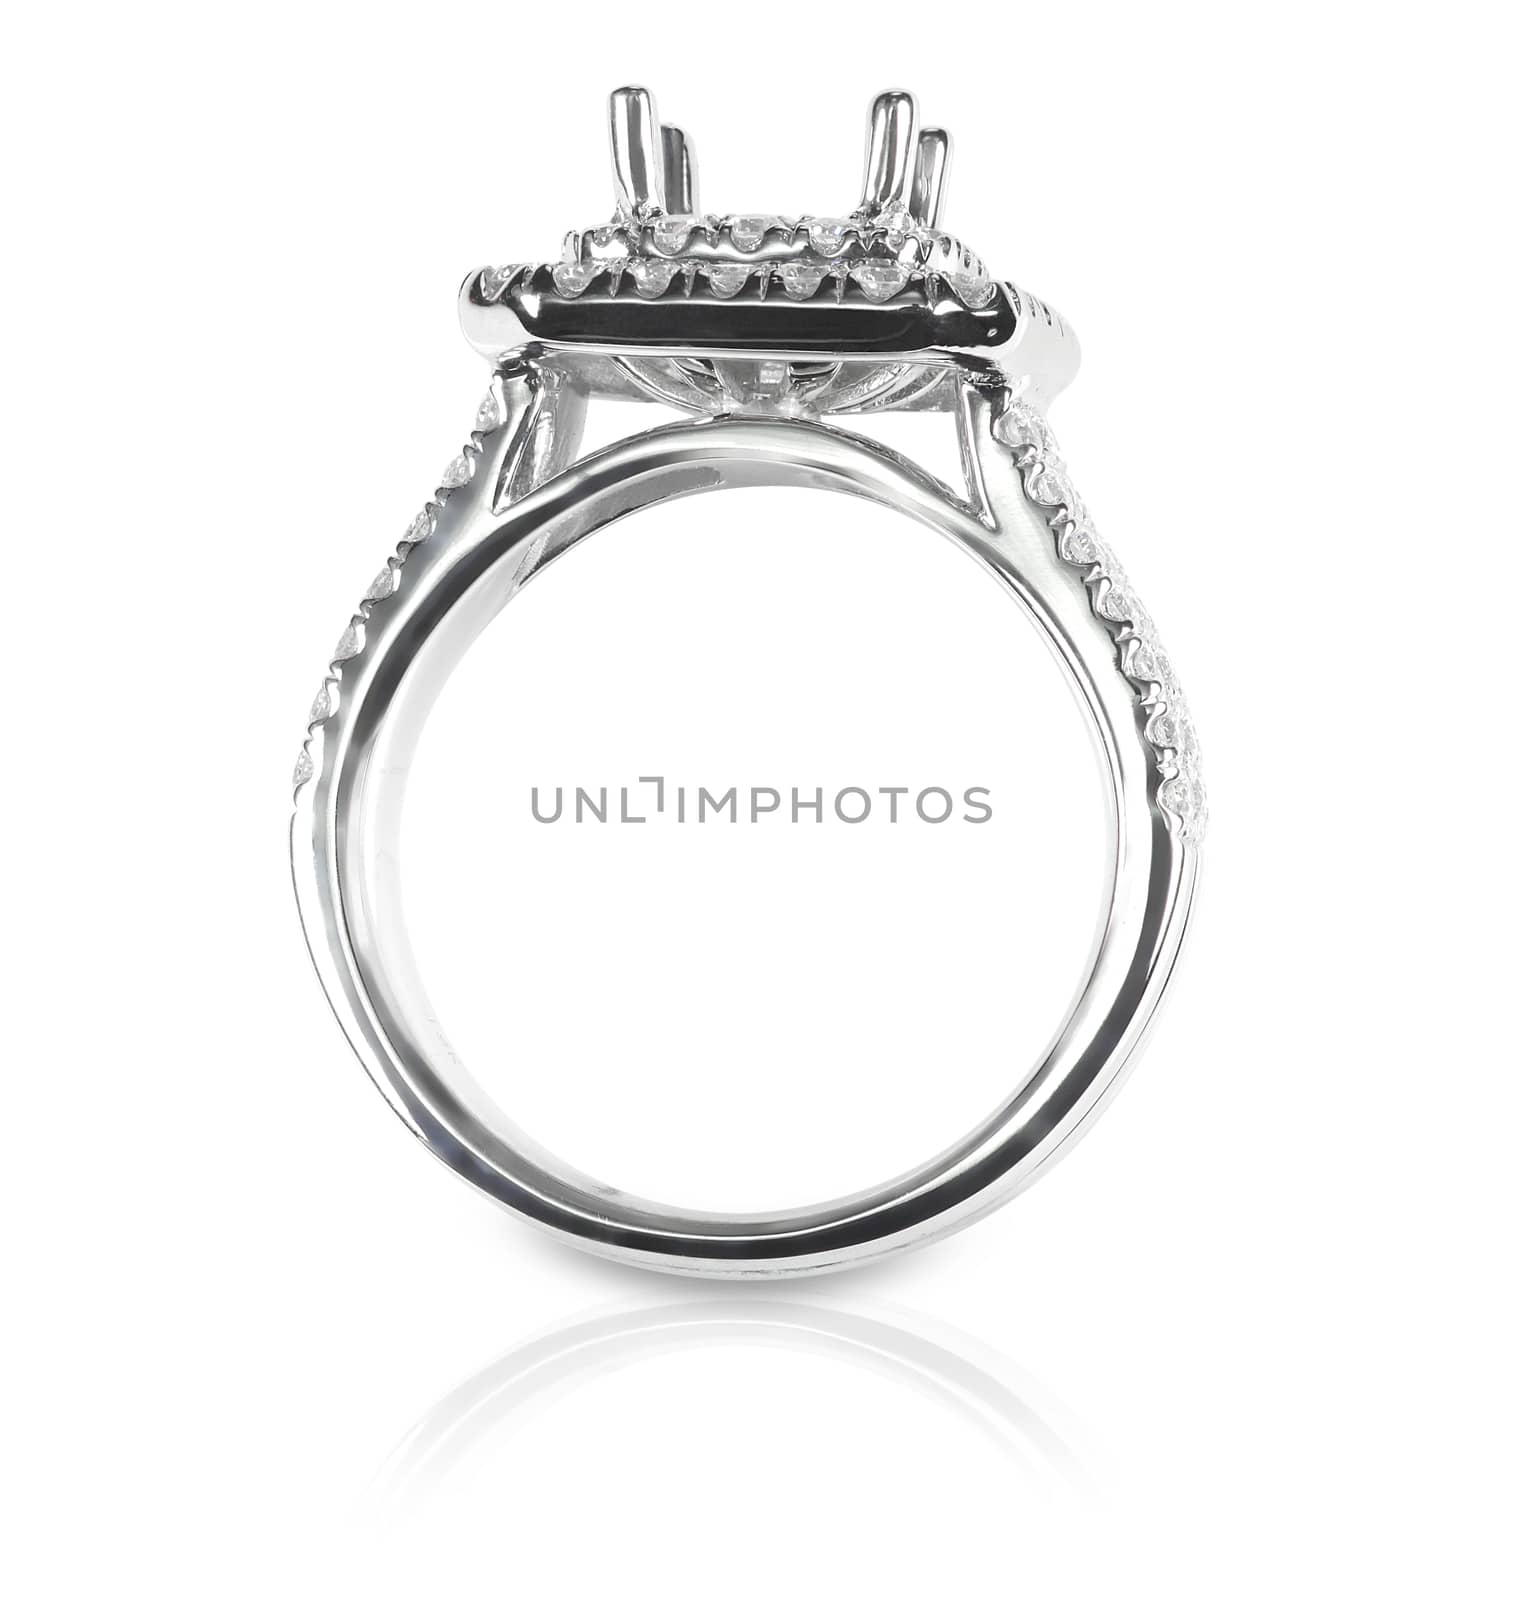 Halo DIamond Engagment Wedding Ring Setting side view. No stone set. Isolated on white.